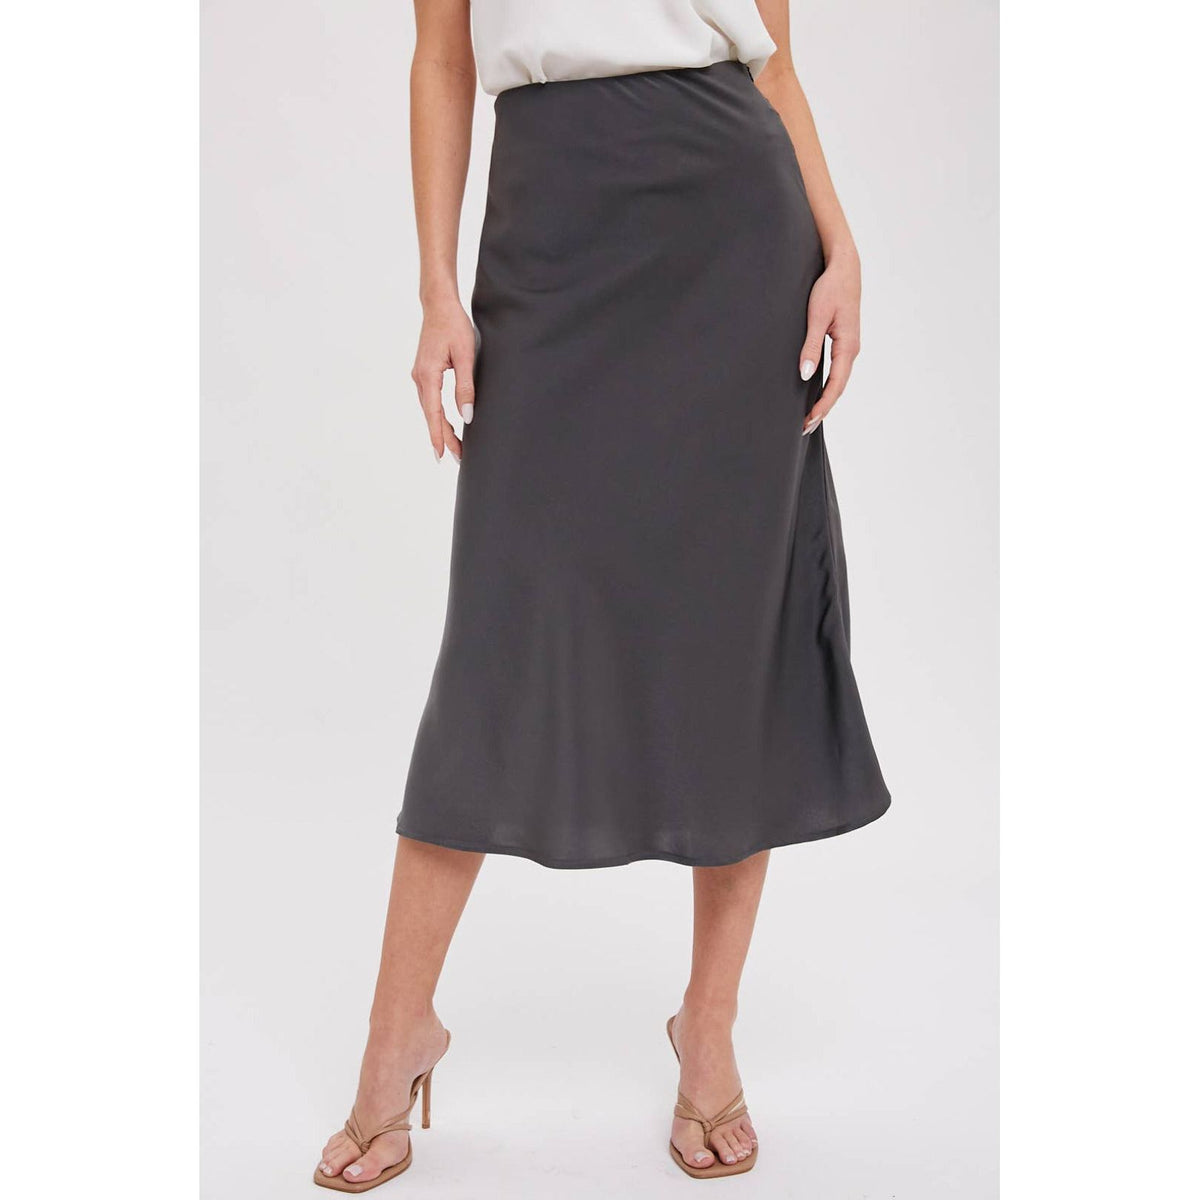 Long satin midi skirt - women's apparel 